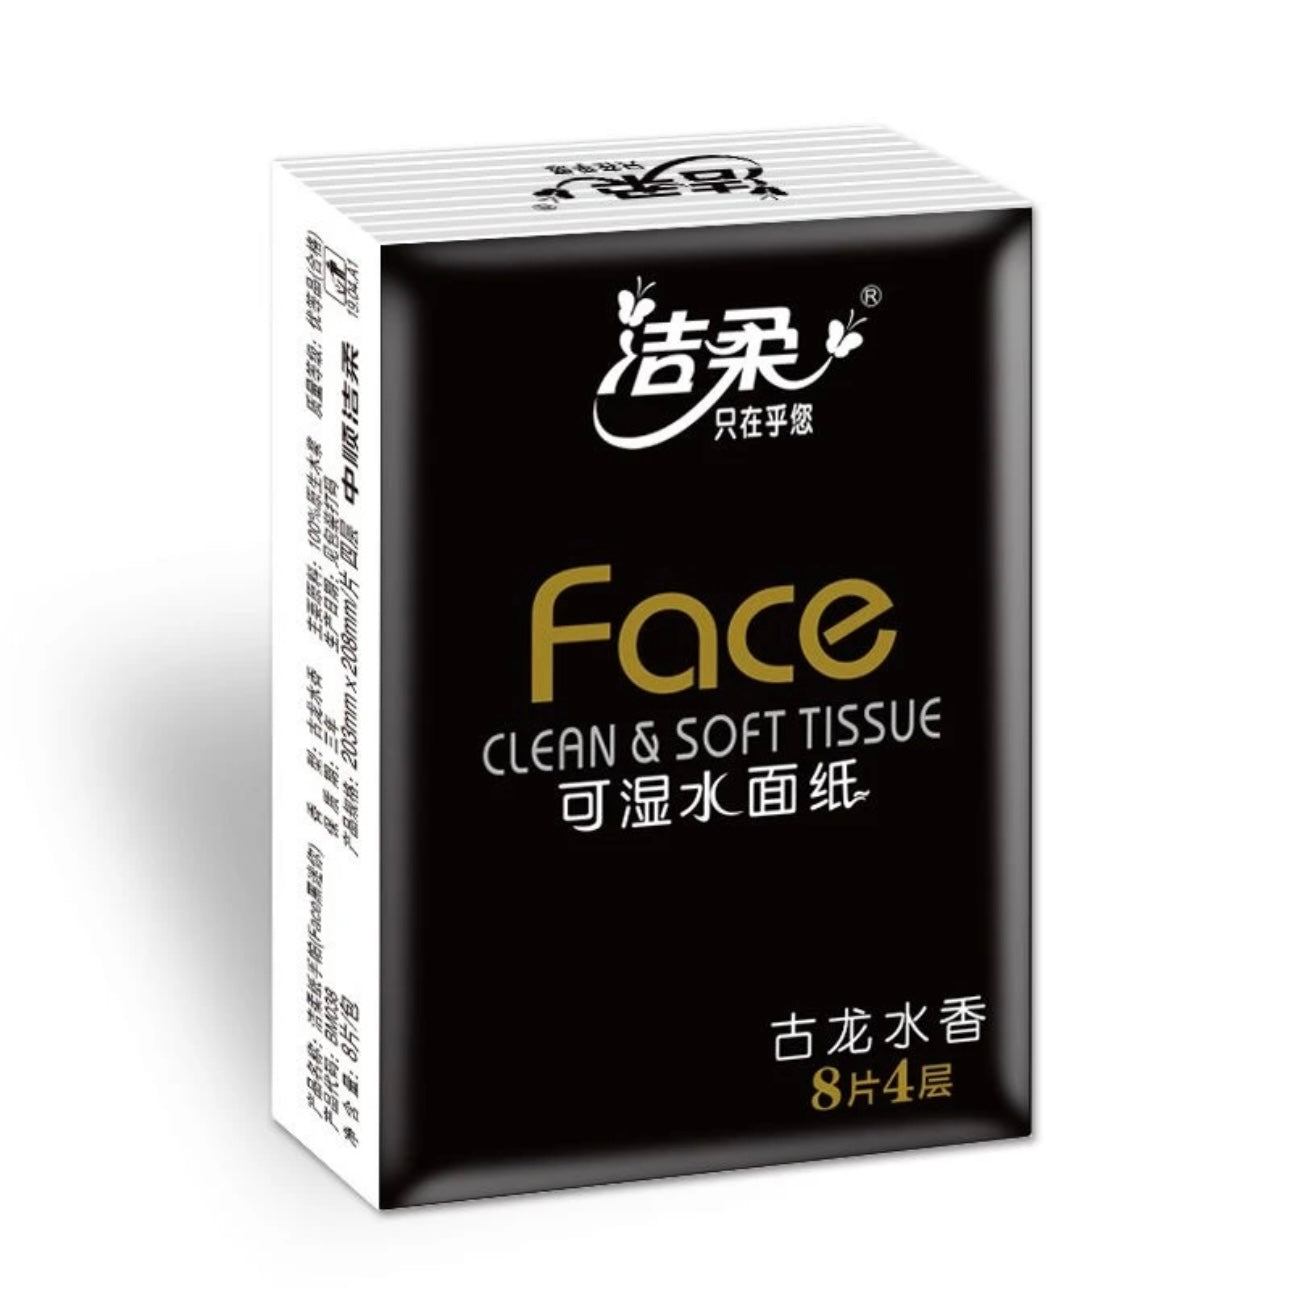 Face Tissue